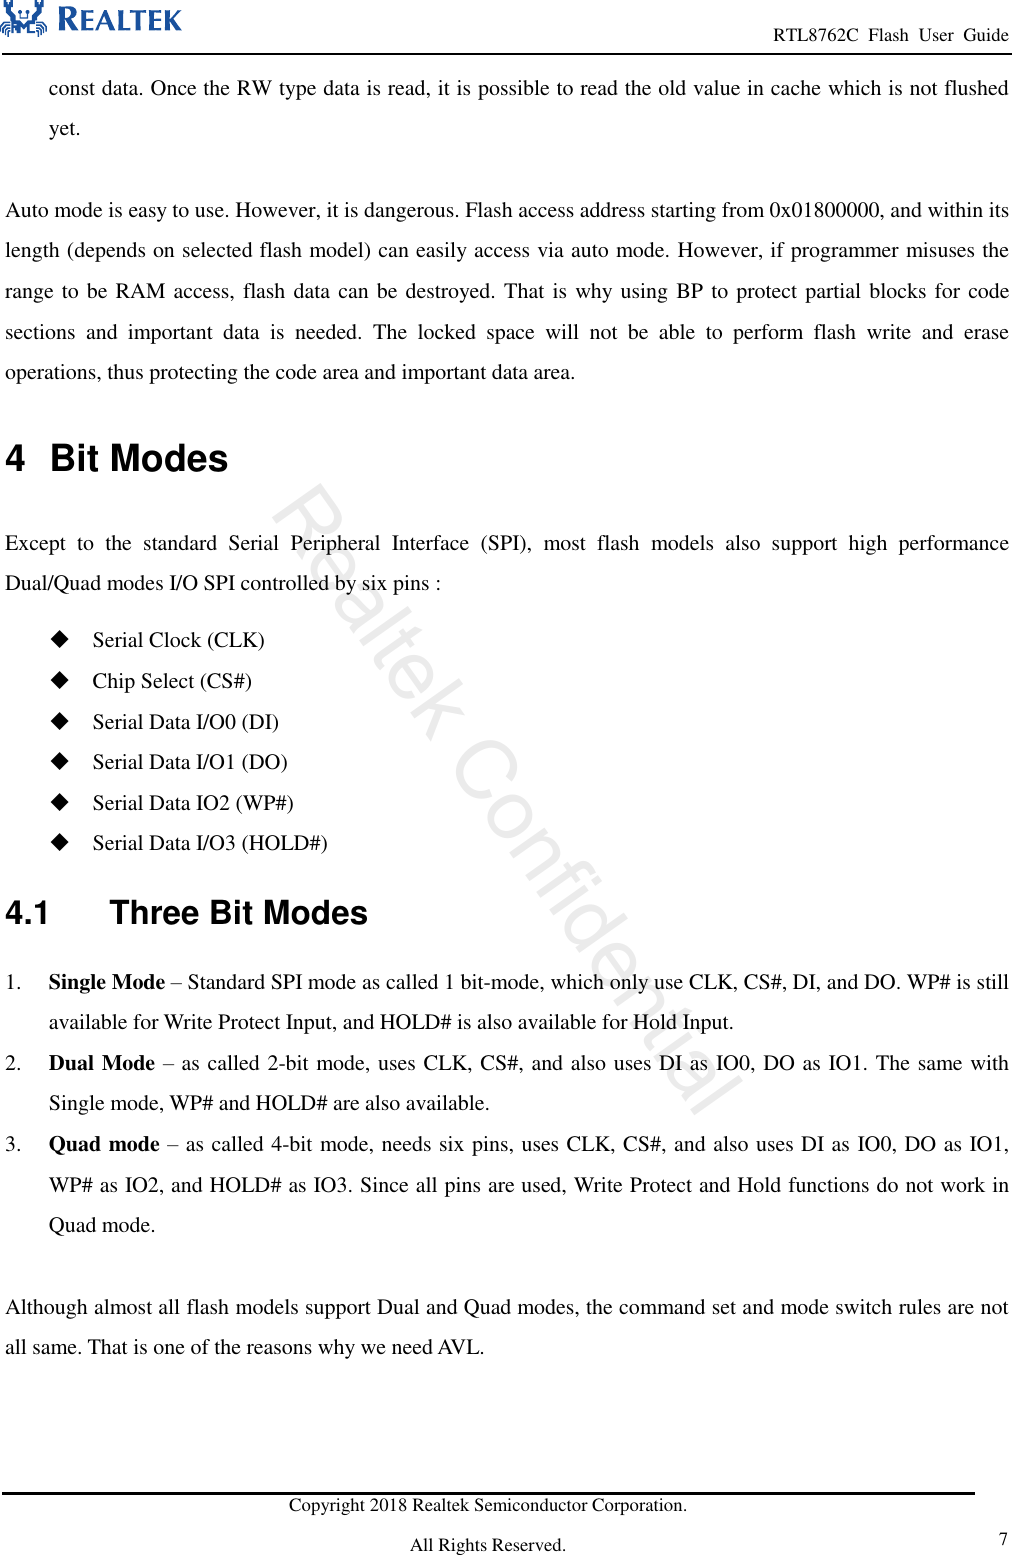 Page 7 of 12 - Flash User Guide RTL8762C EN